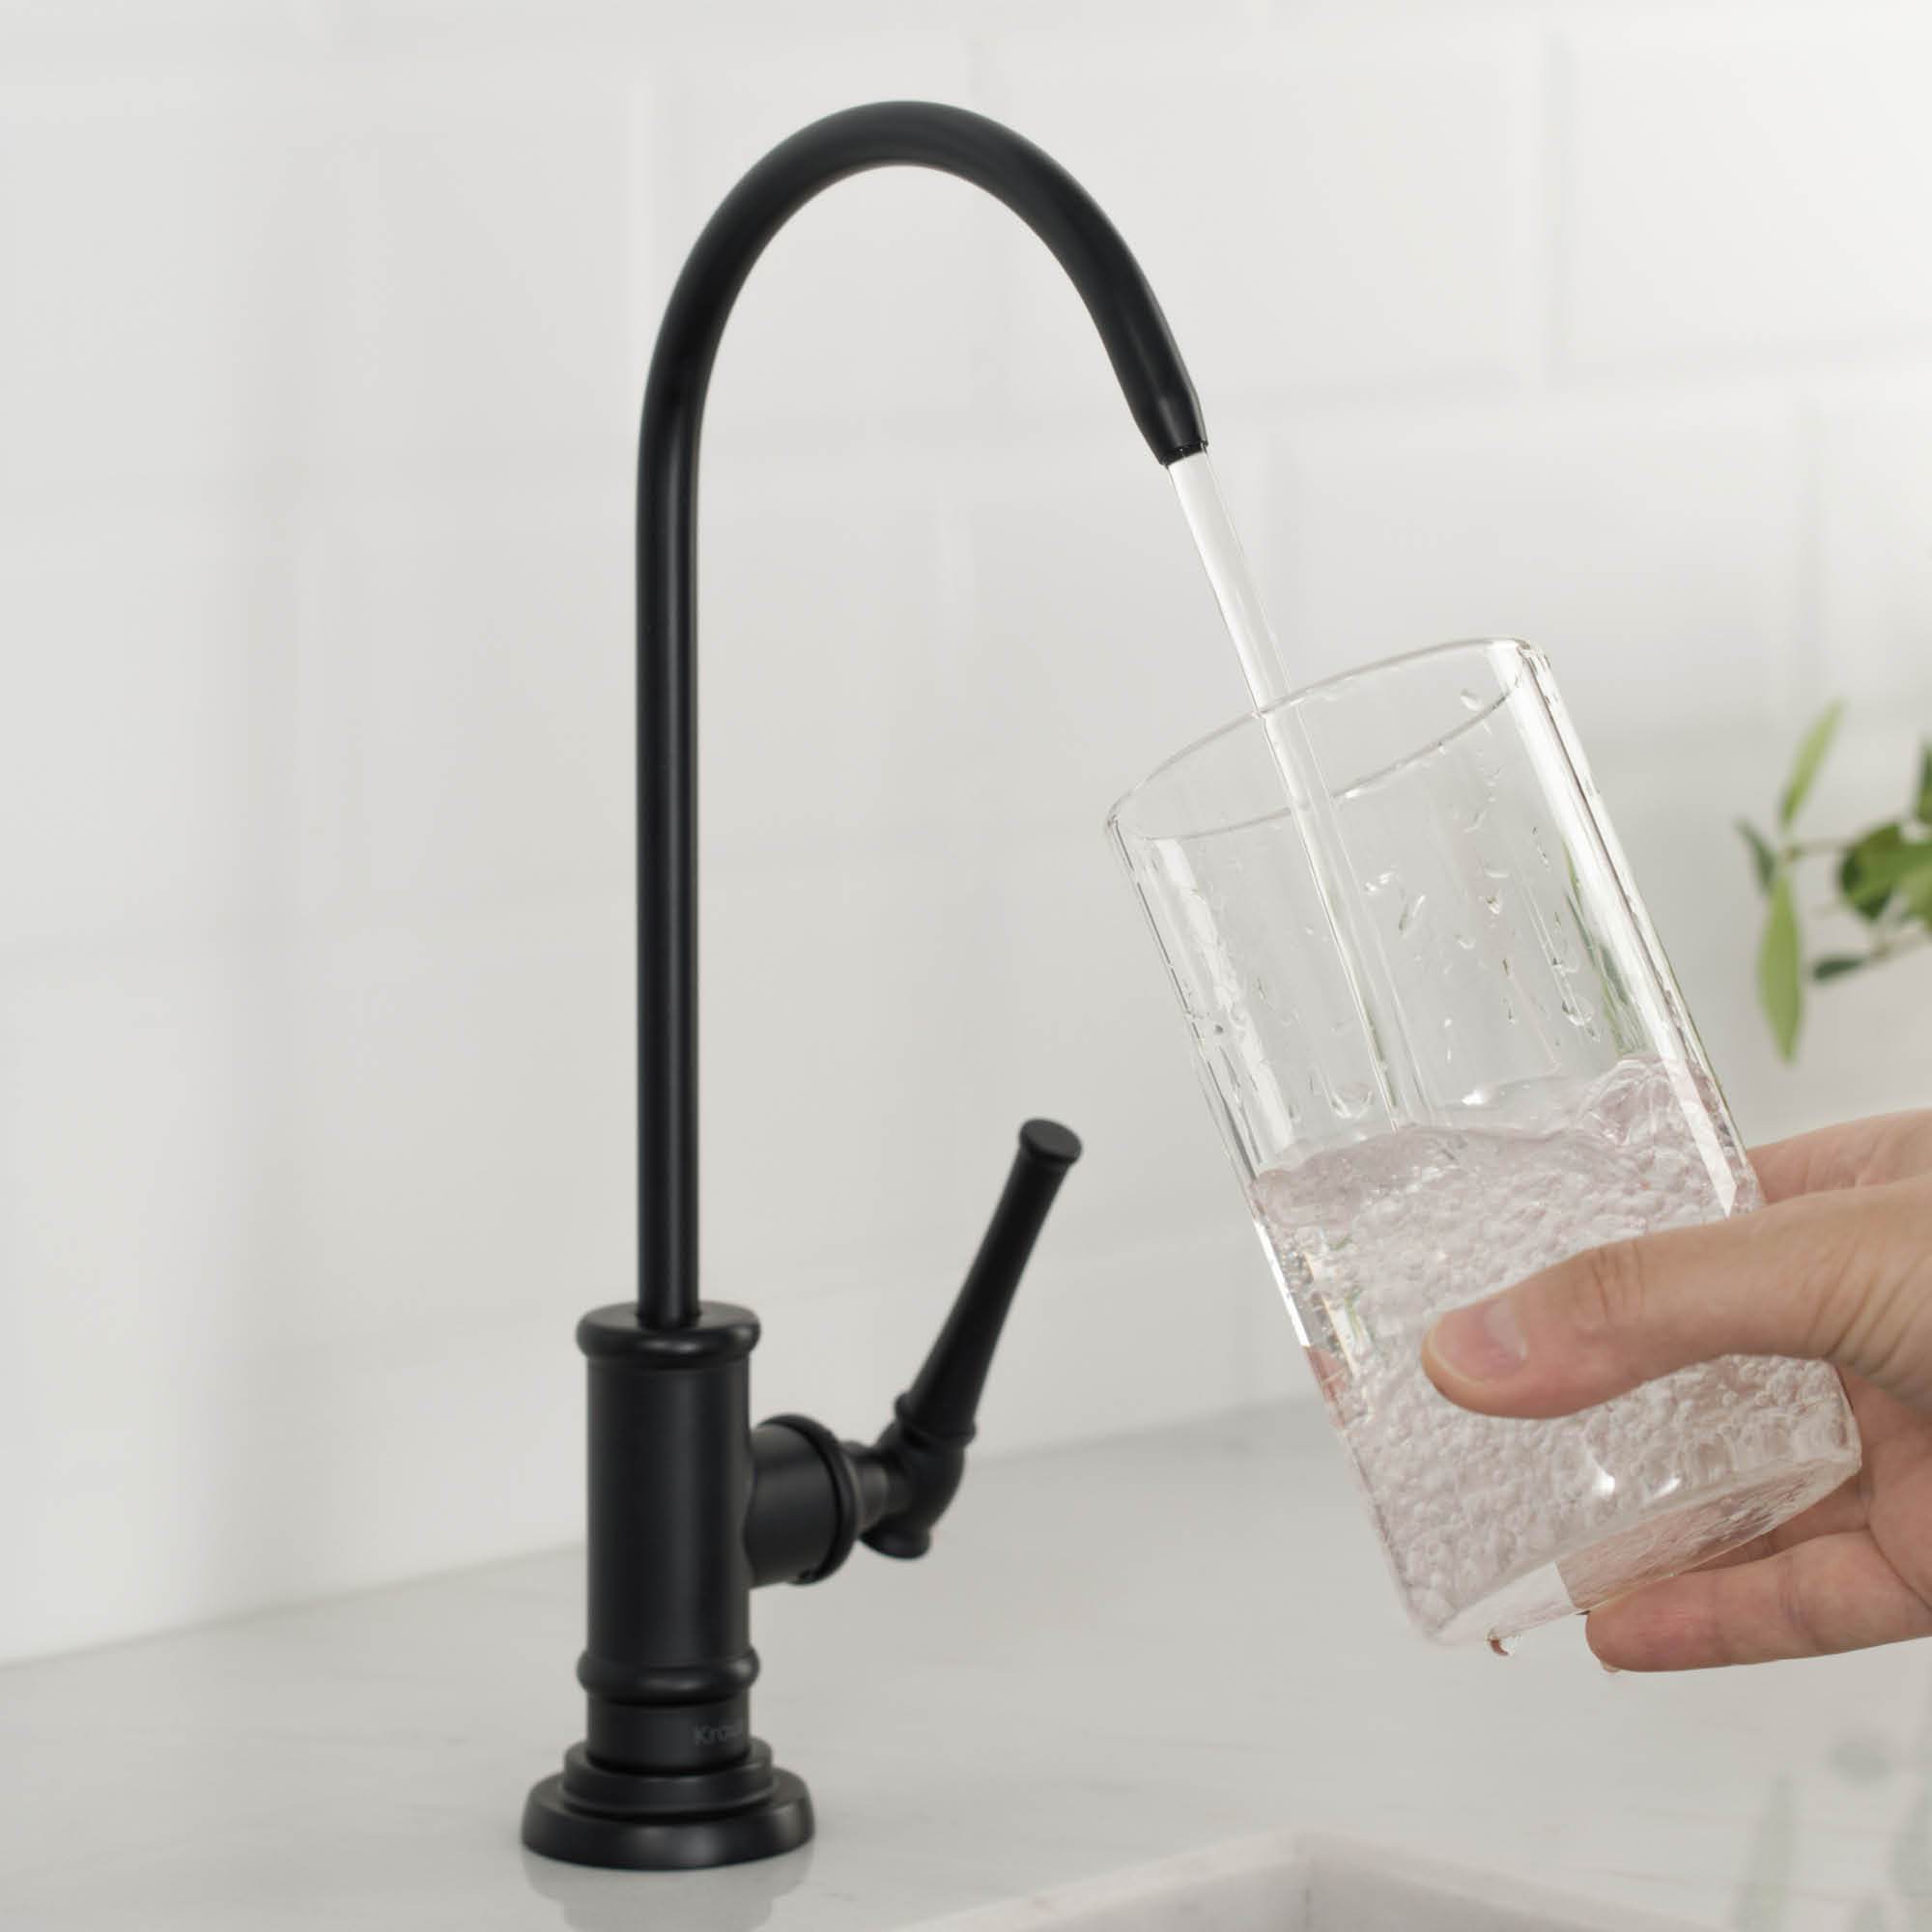 KRAUS Allyn Drinking Water Dispenser Kitchen Faucet in Matte Black FF-102MB | DirectSinks